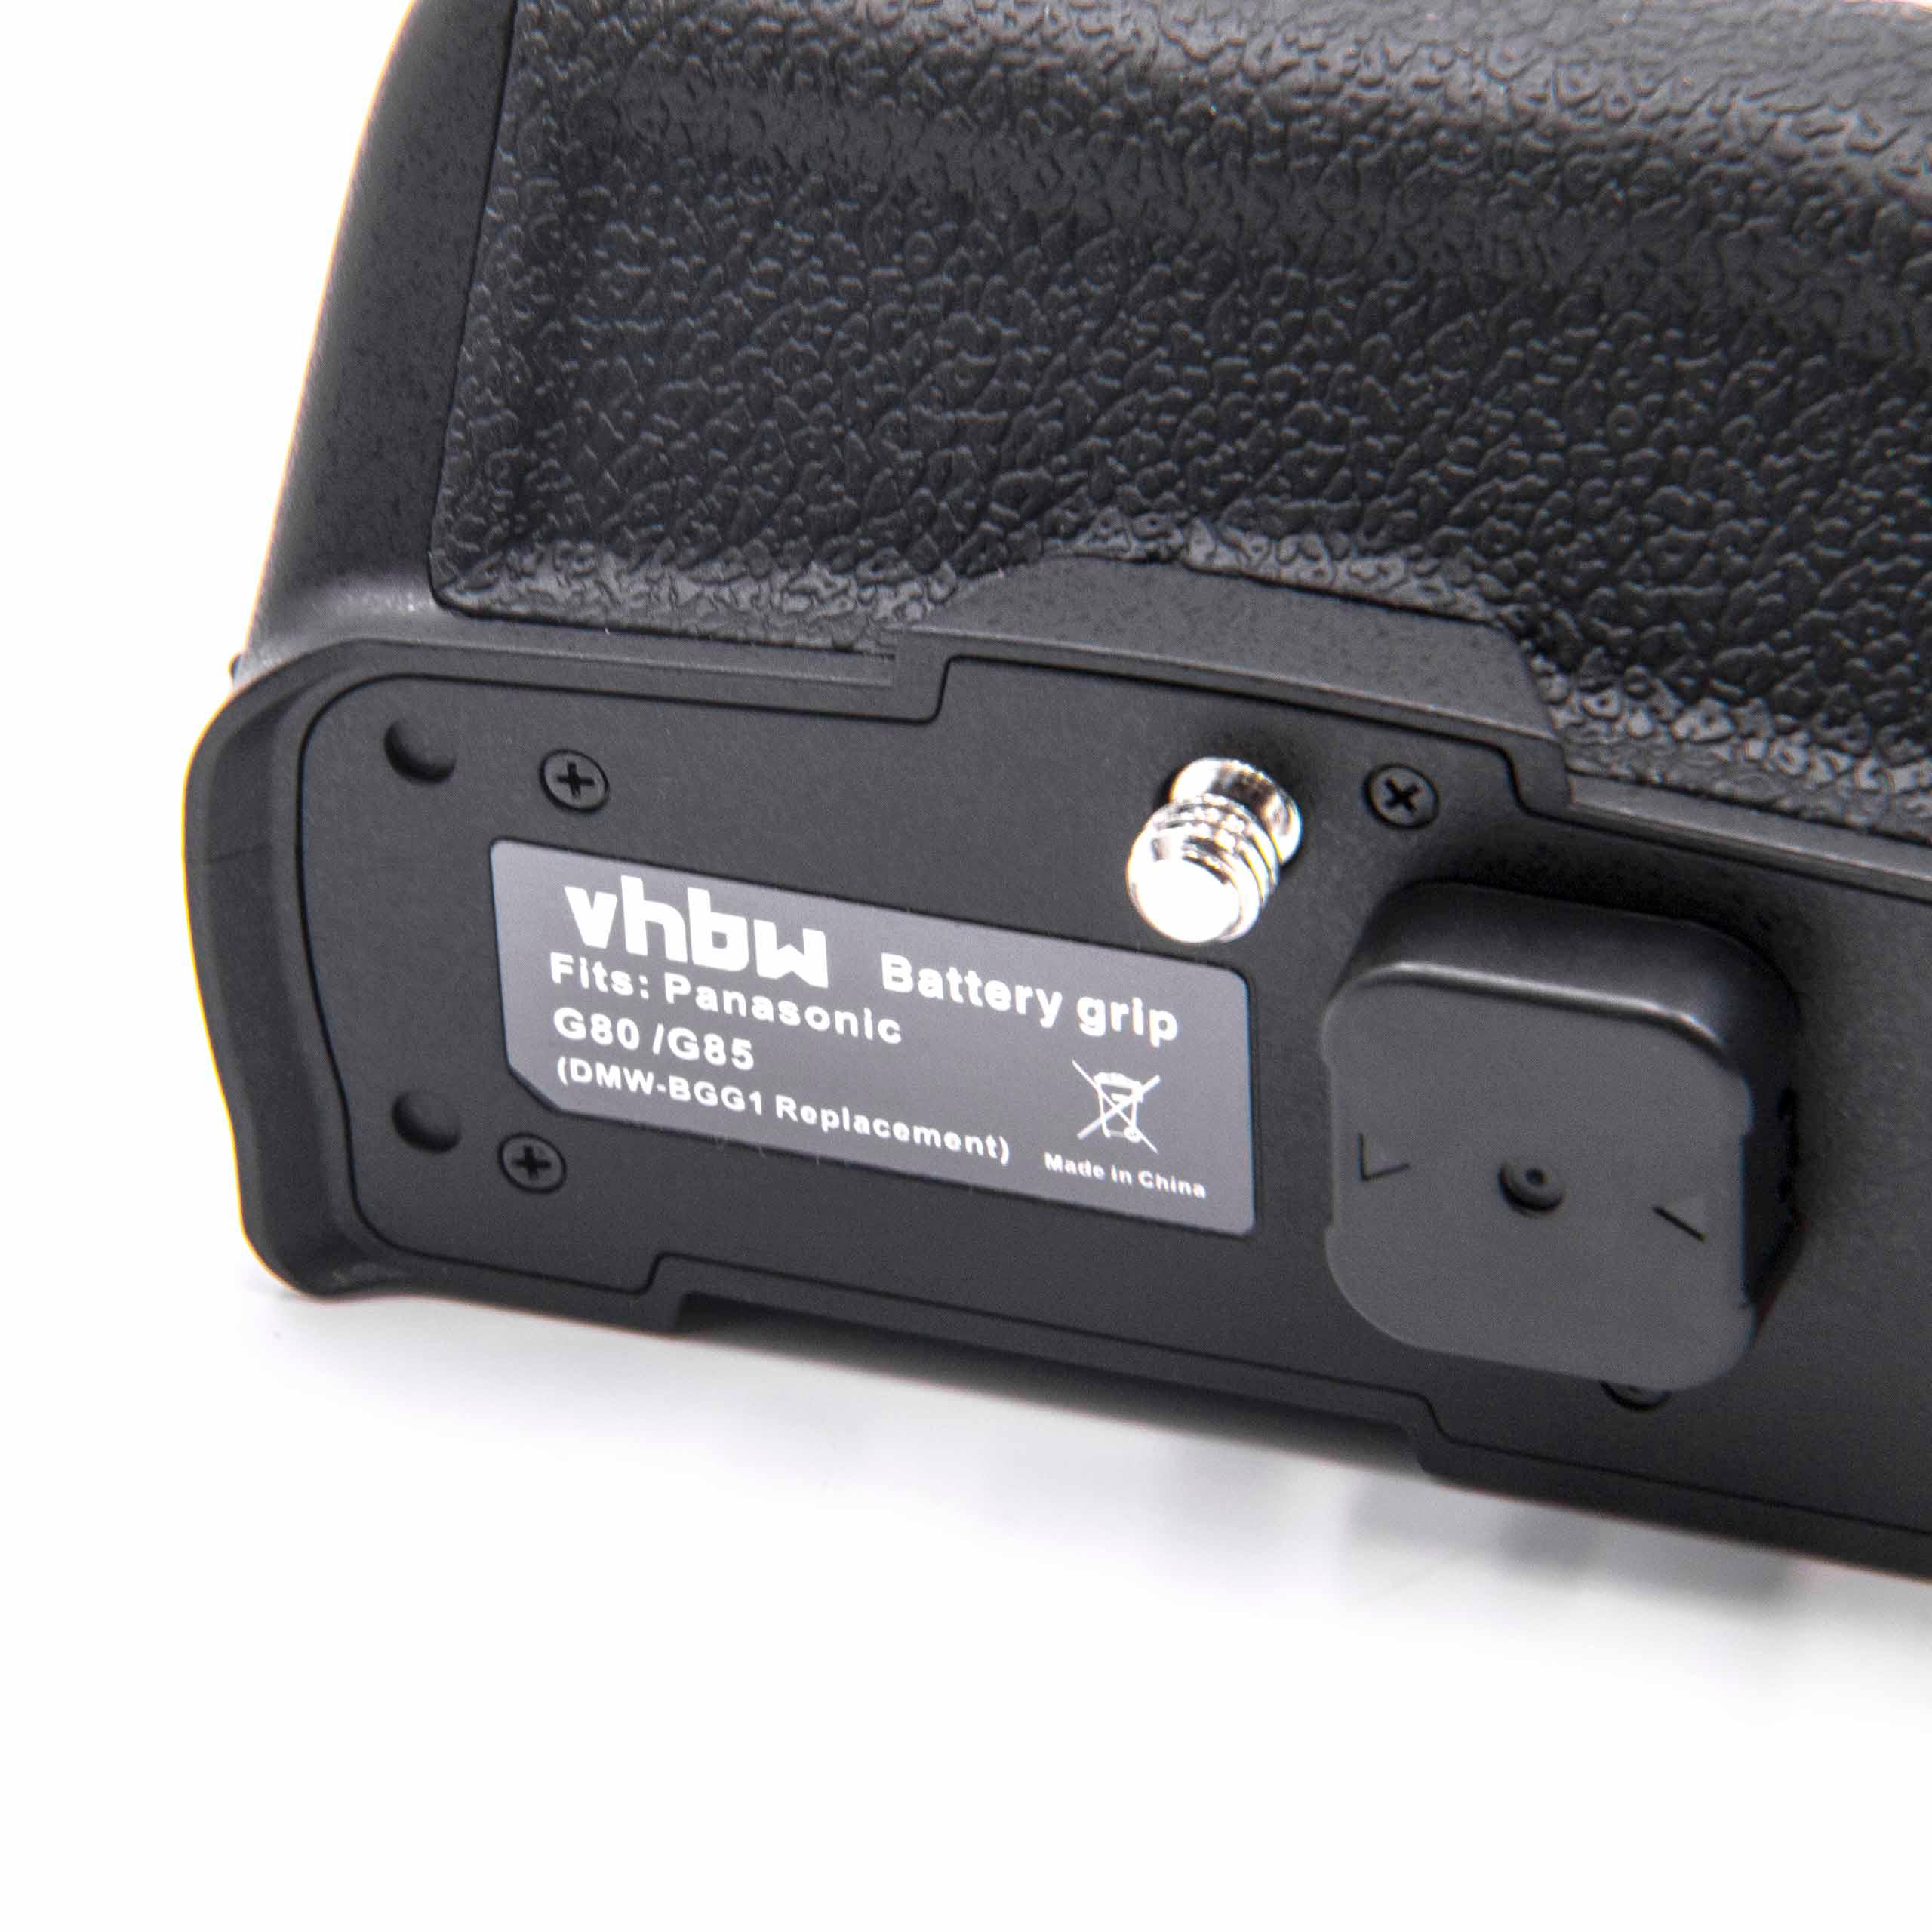 Impugnatura battery grip sostituisce Panasonic DMW-BGG1 per camera Panasonic - incl. ghiera 